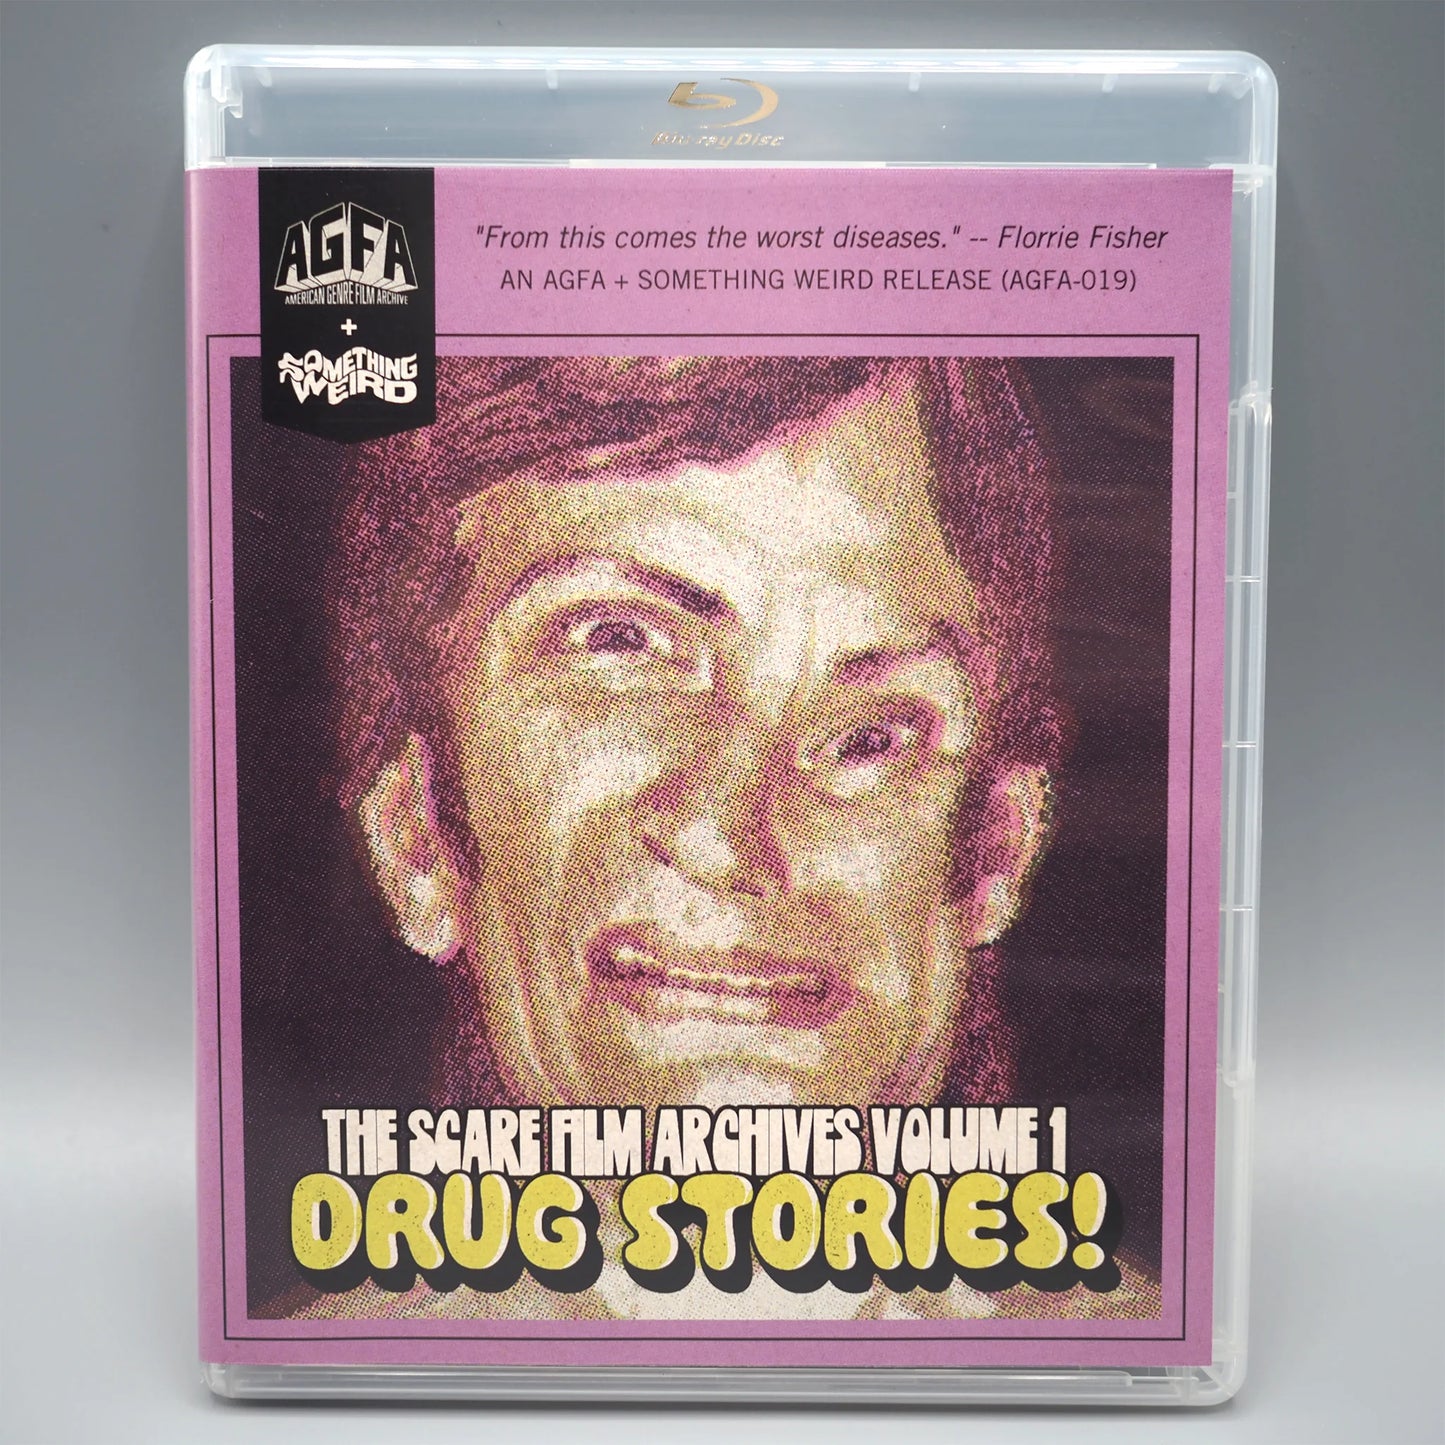 Scare Film Archives Volume 1: Drug Stories!